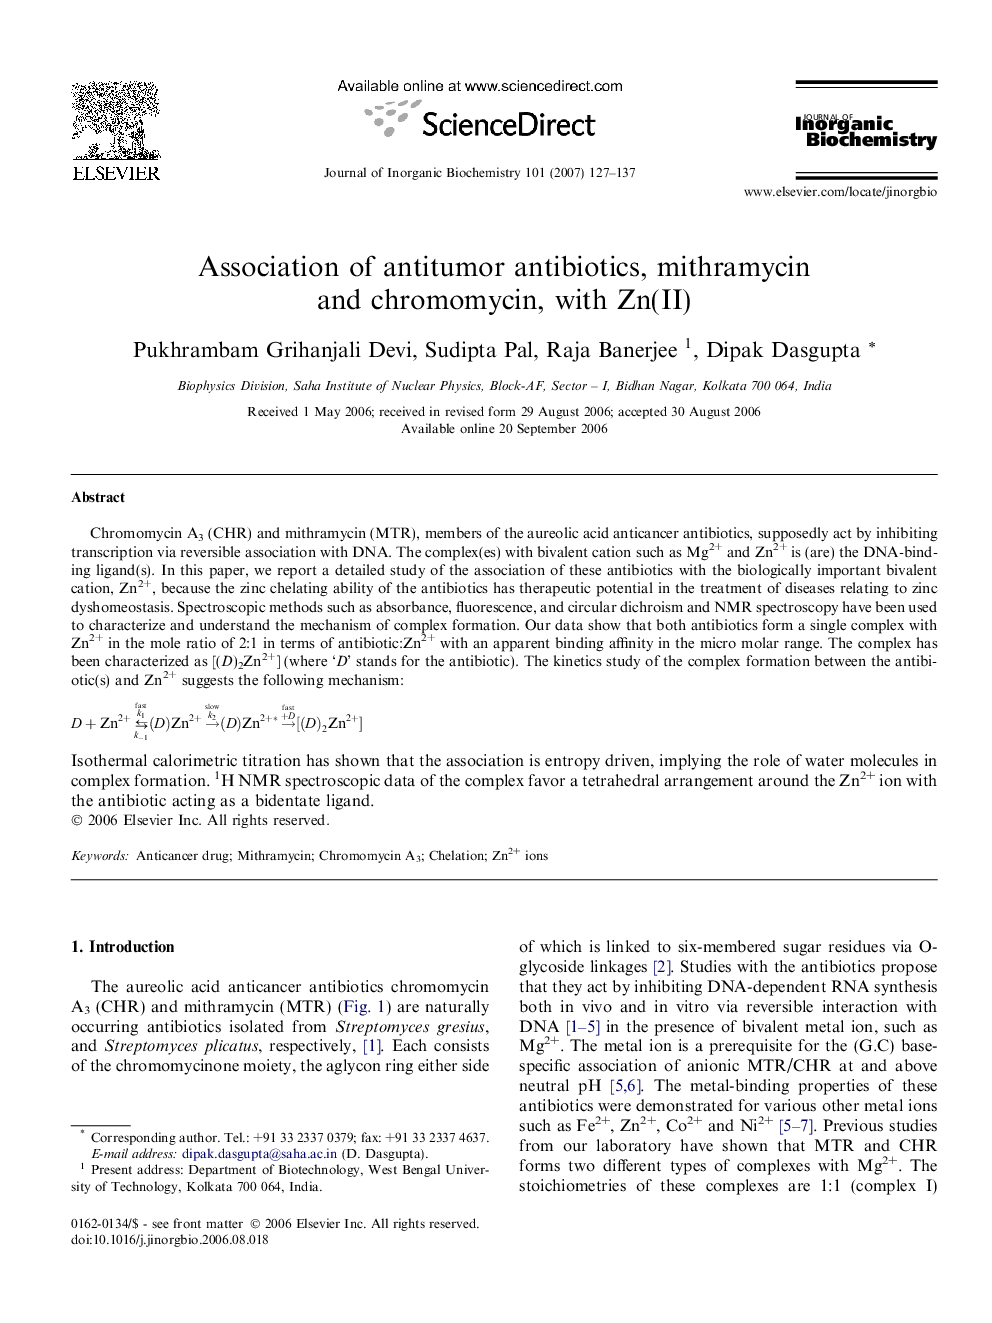 Association of antitumor antibiotics, mithramycin and chromomycin, with Zn(II)